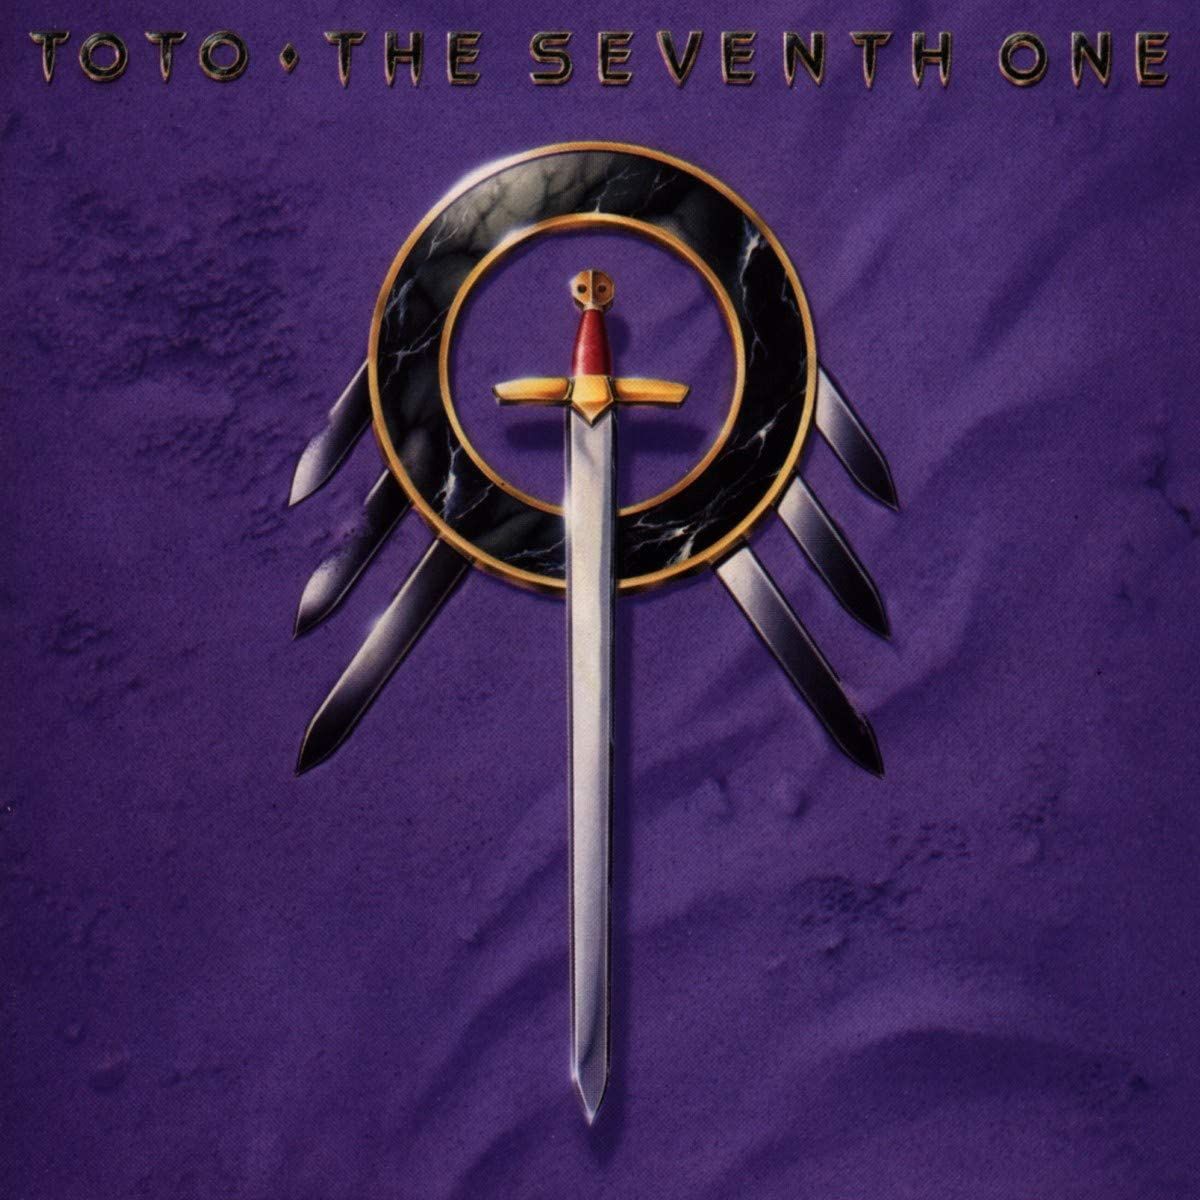 The Seventh One: Vinyl LP